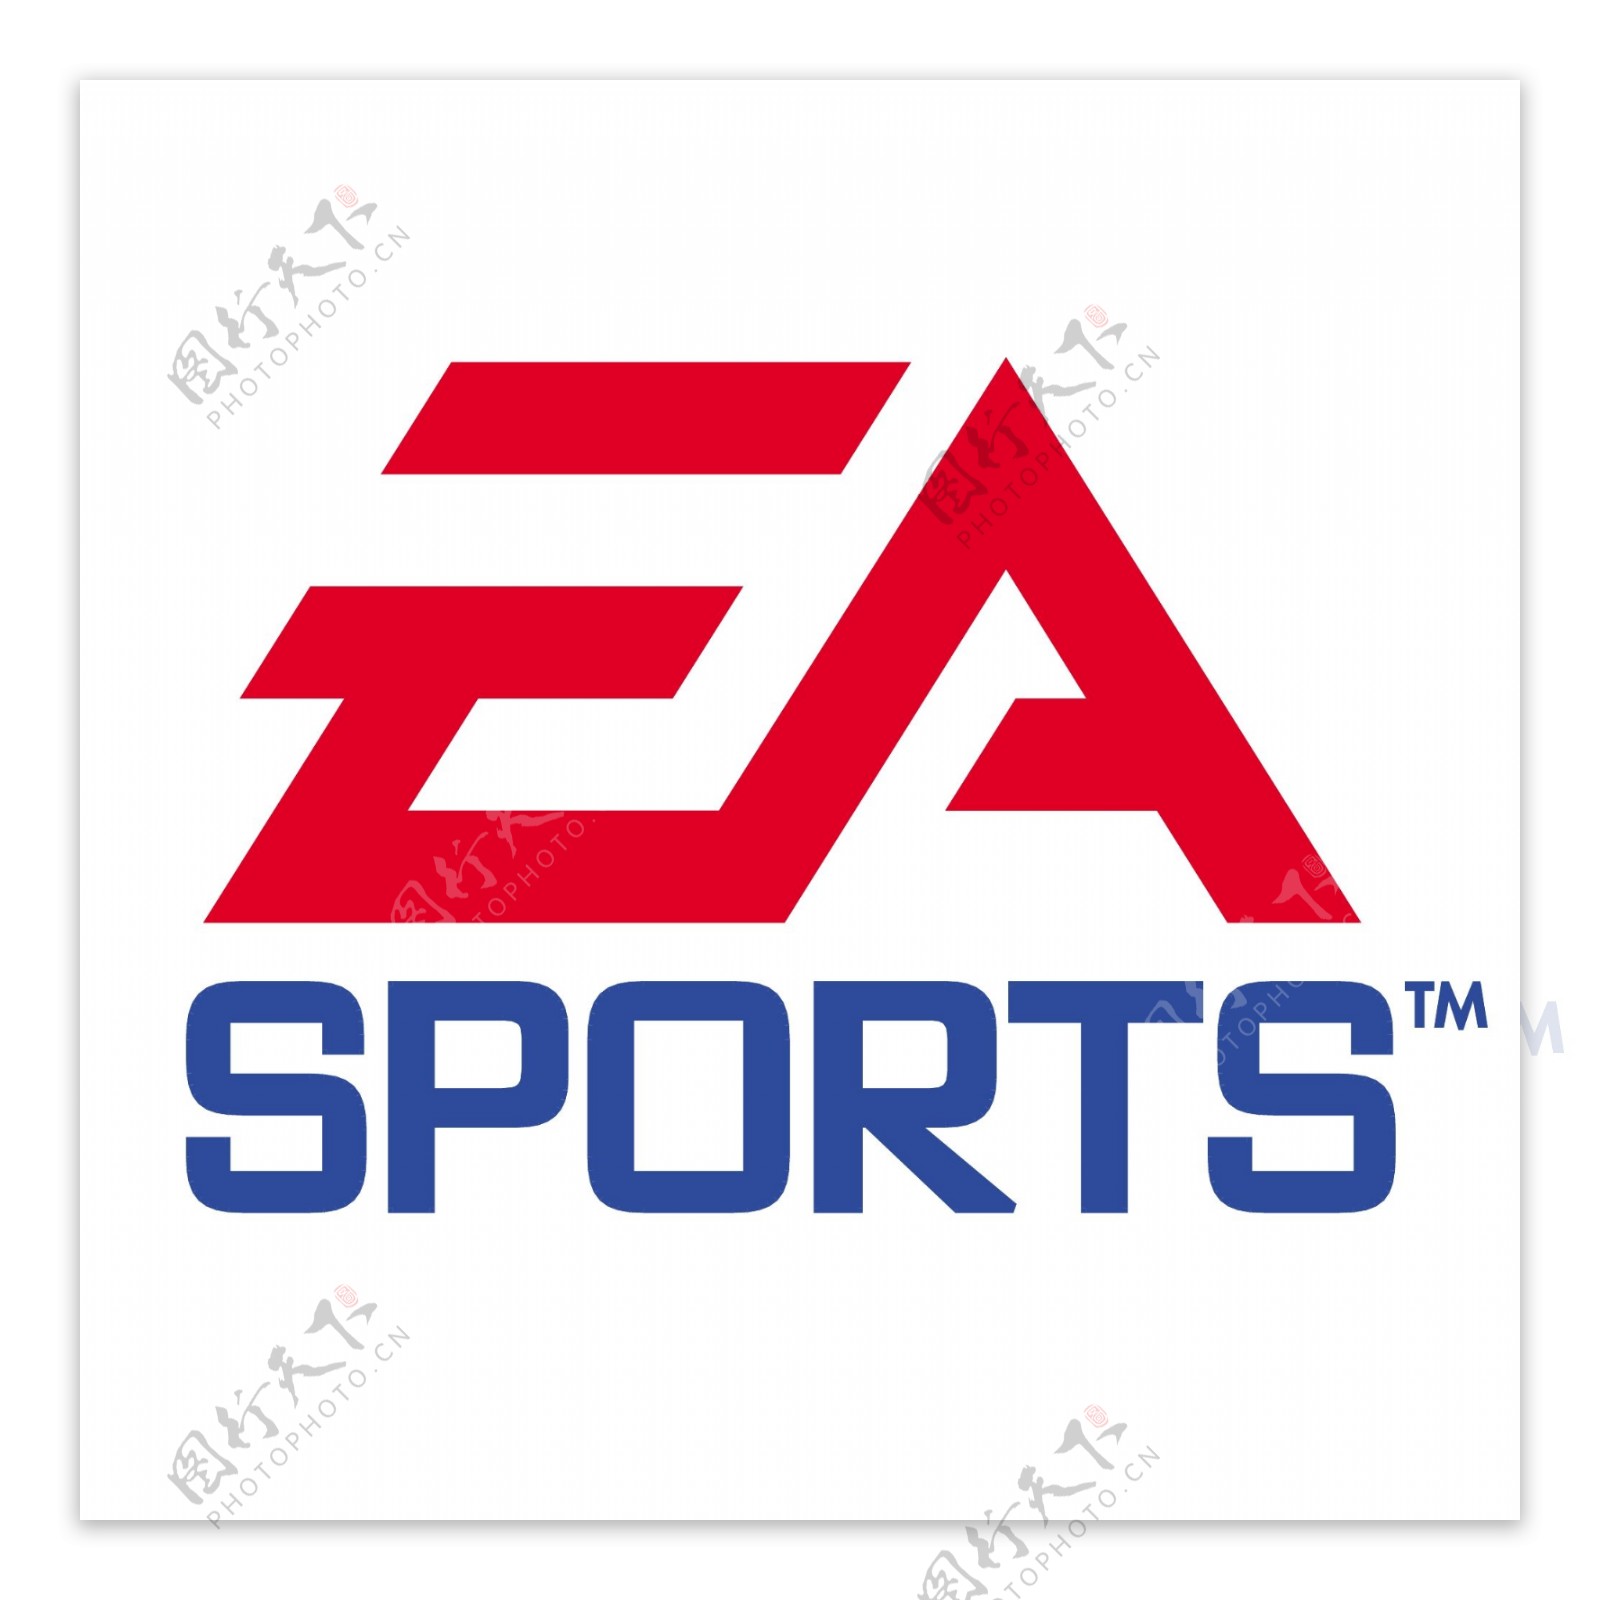 EA体育